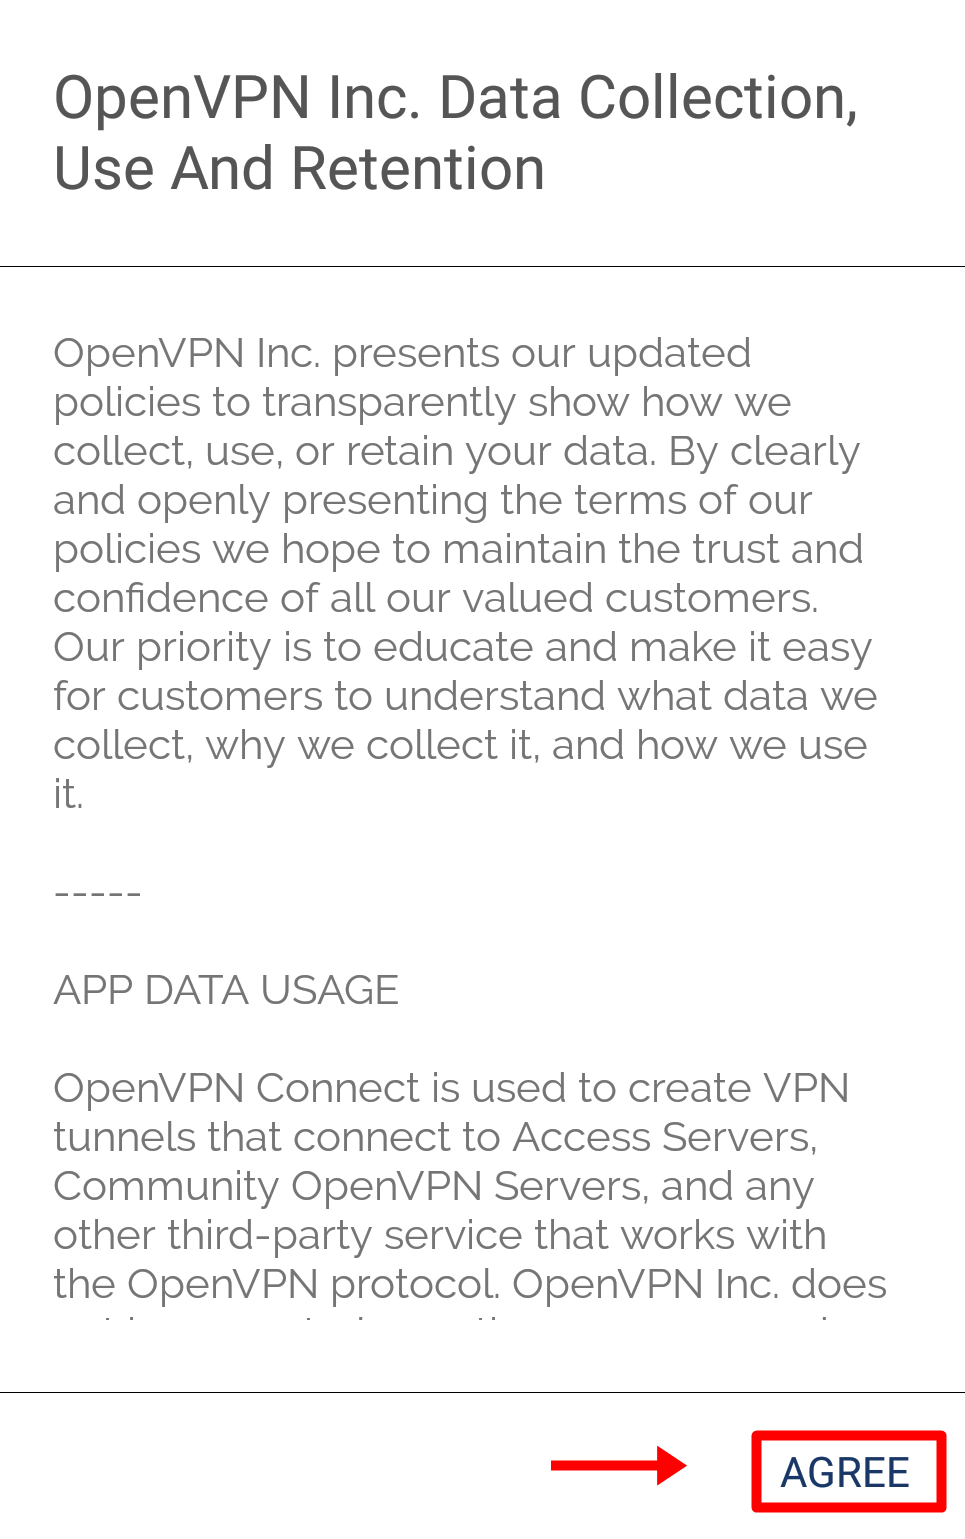 Le VPN installation OpenVPN sur Android